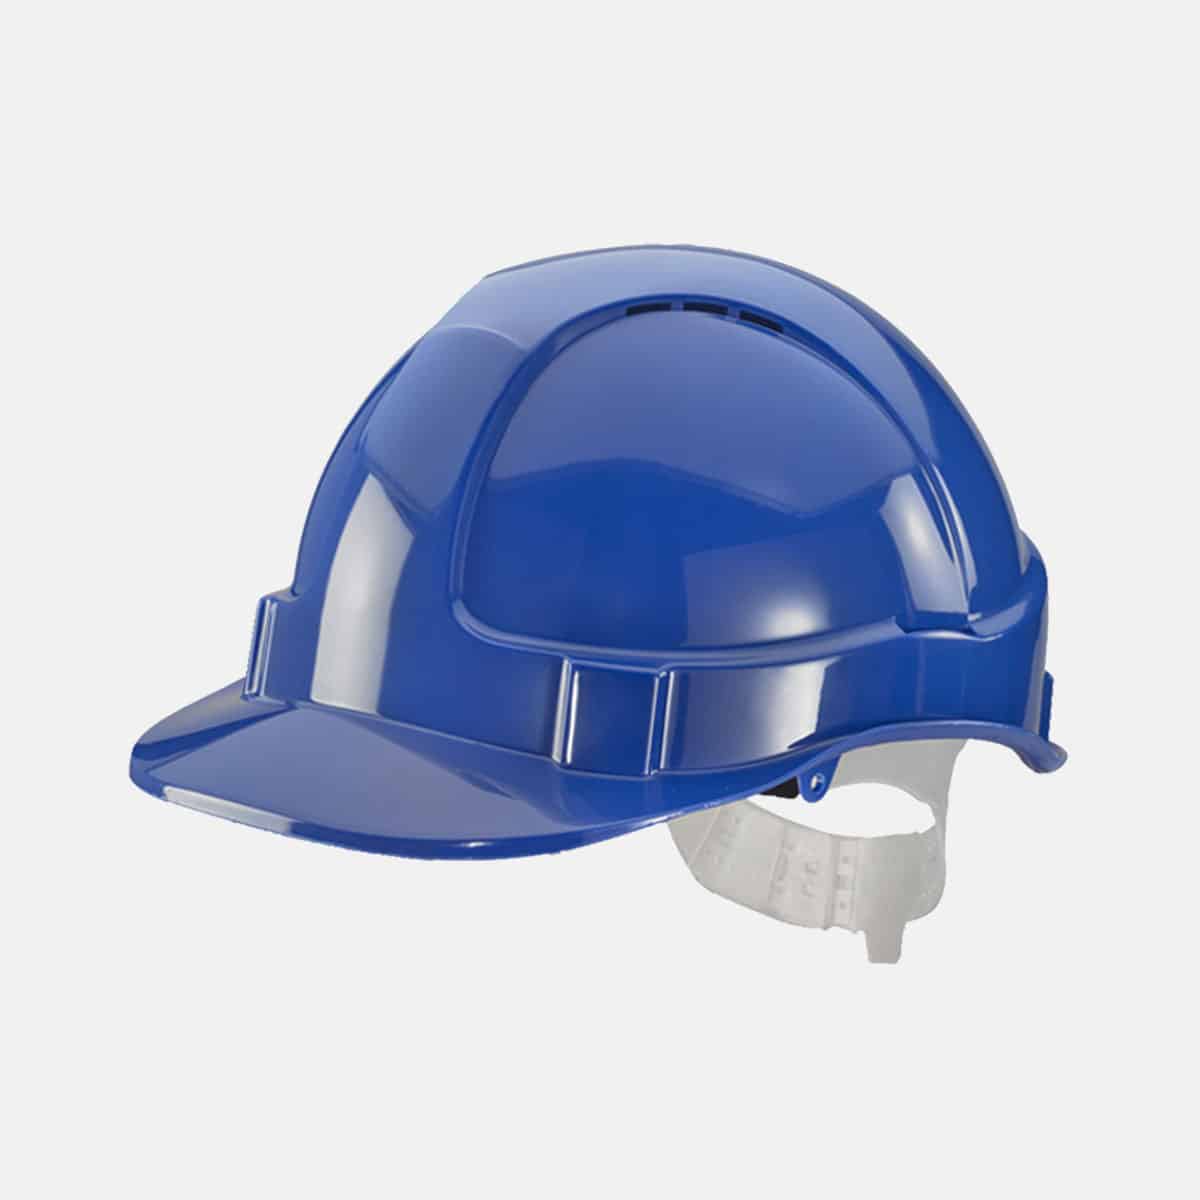 Bseen Economy Vented Safety Helmet